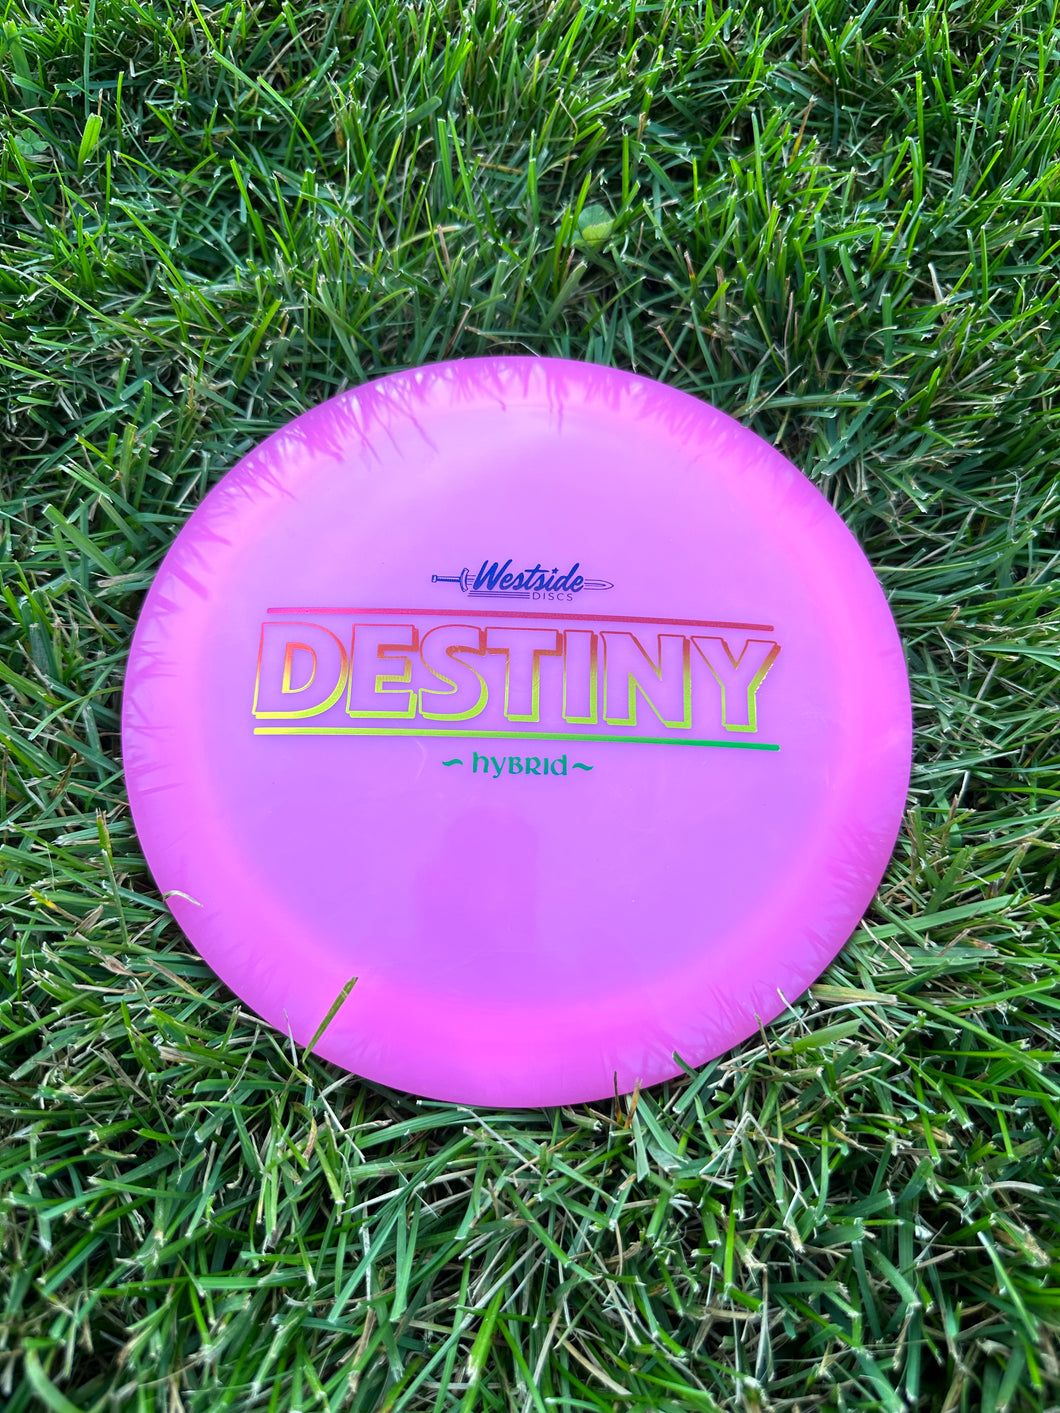 Westside discs Destiny Distance Driver 169g pink